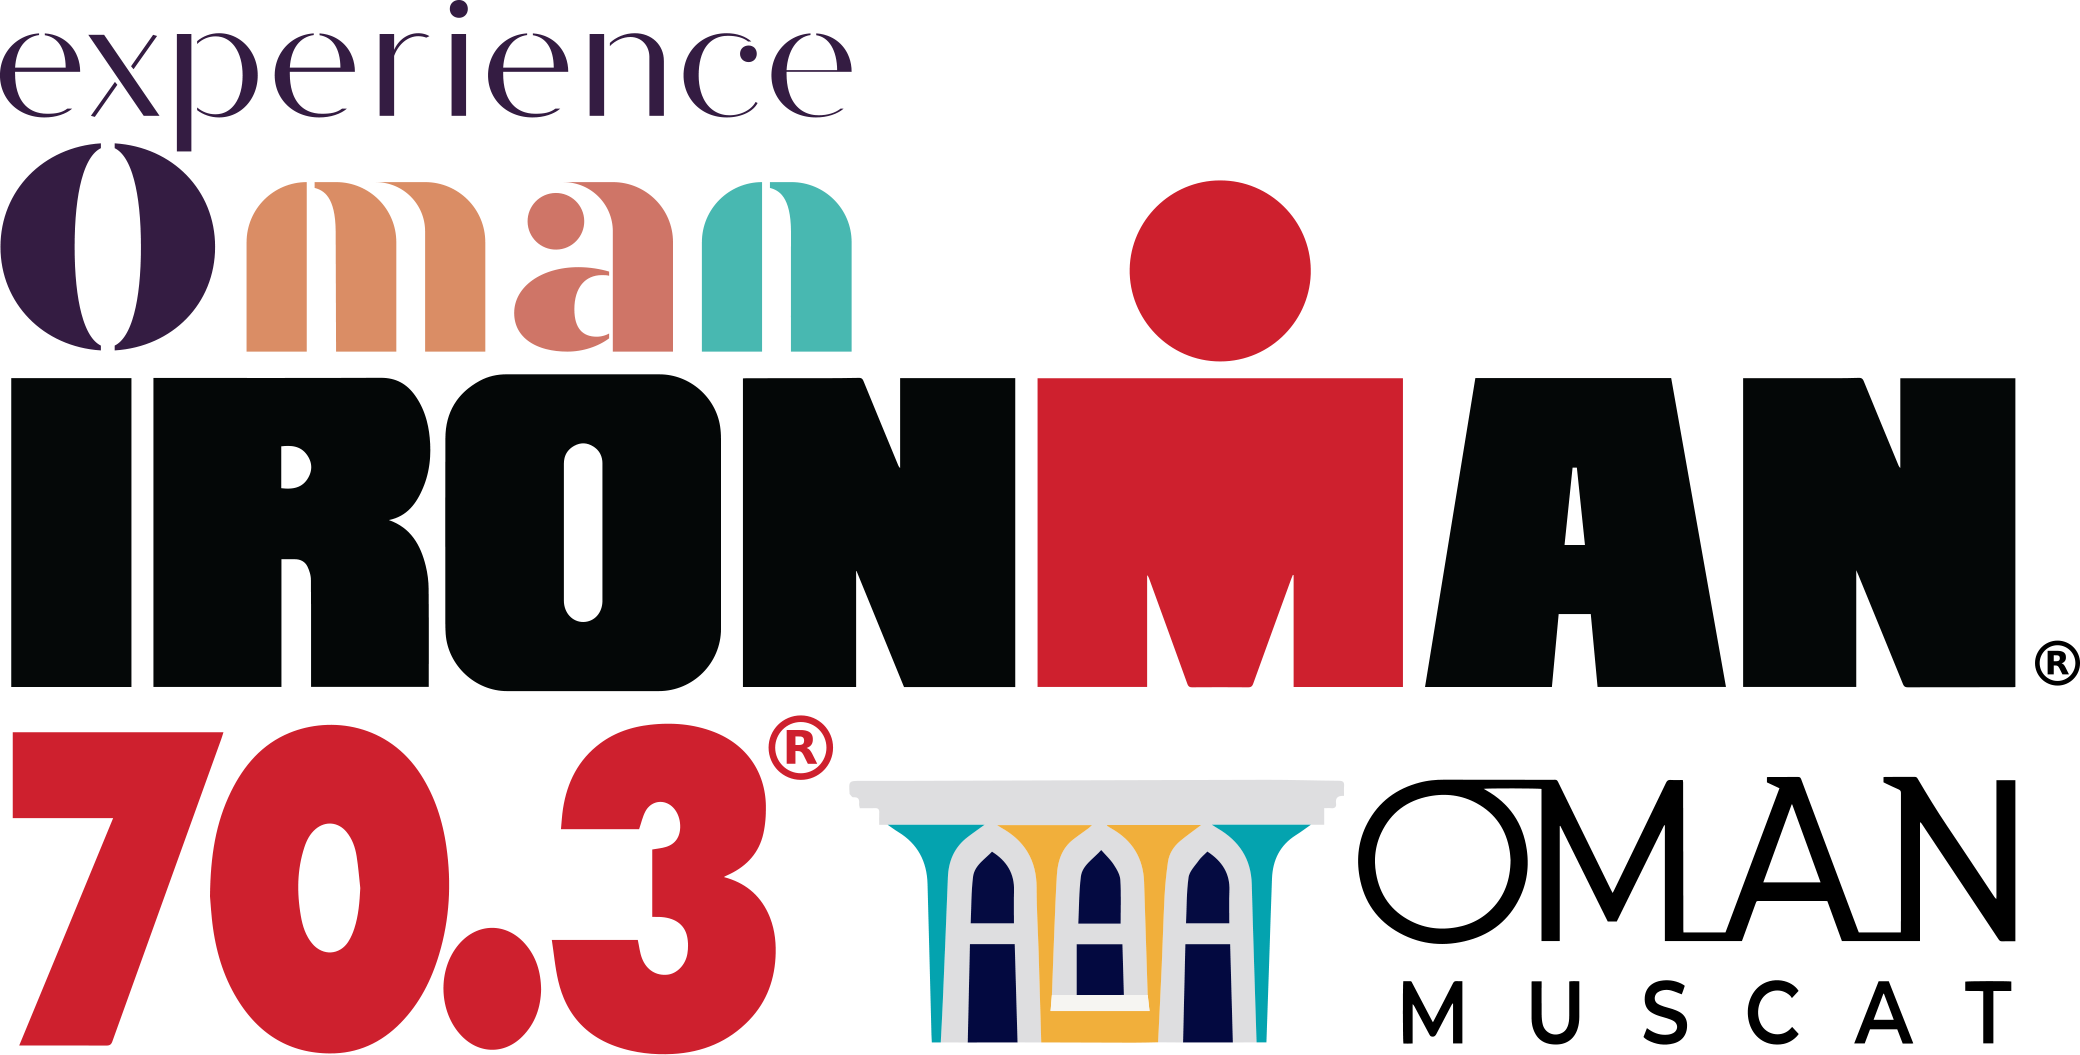 Official IRONMAN 70.3 Oman race logo